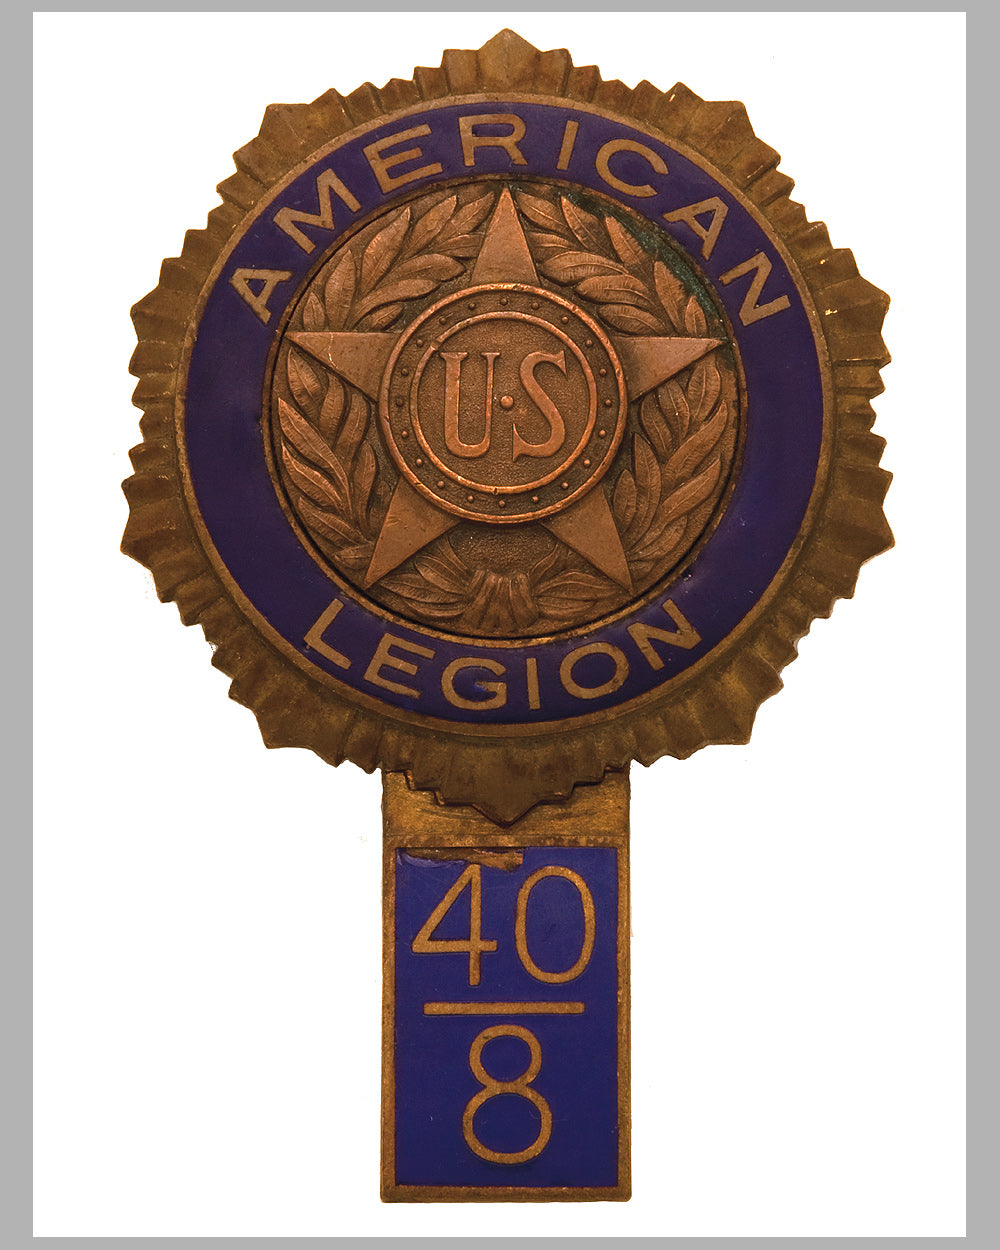 U.S. American Legion 40/8 Organization member’s badge